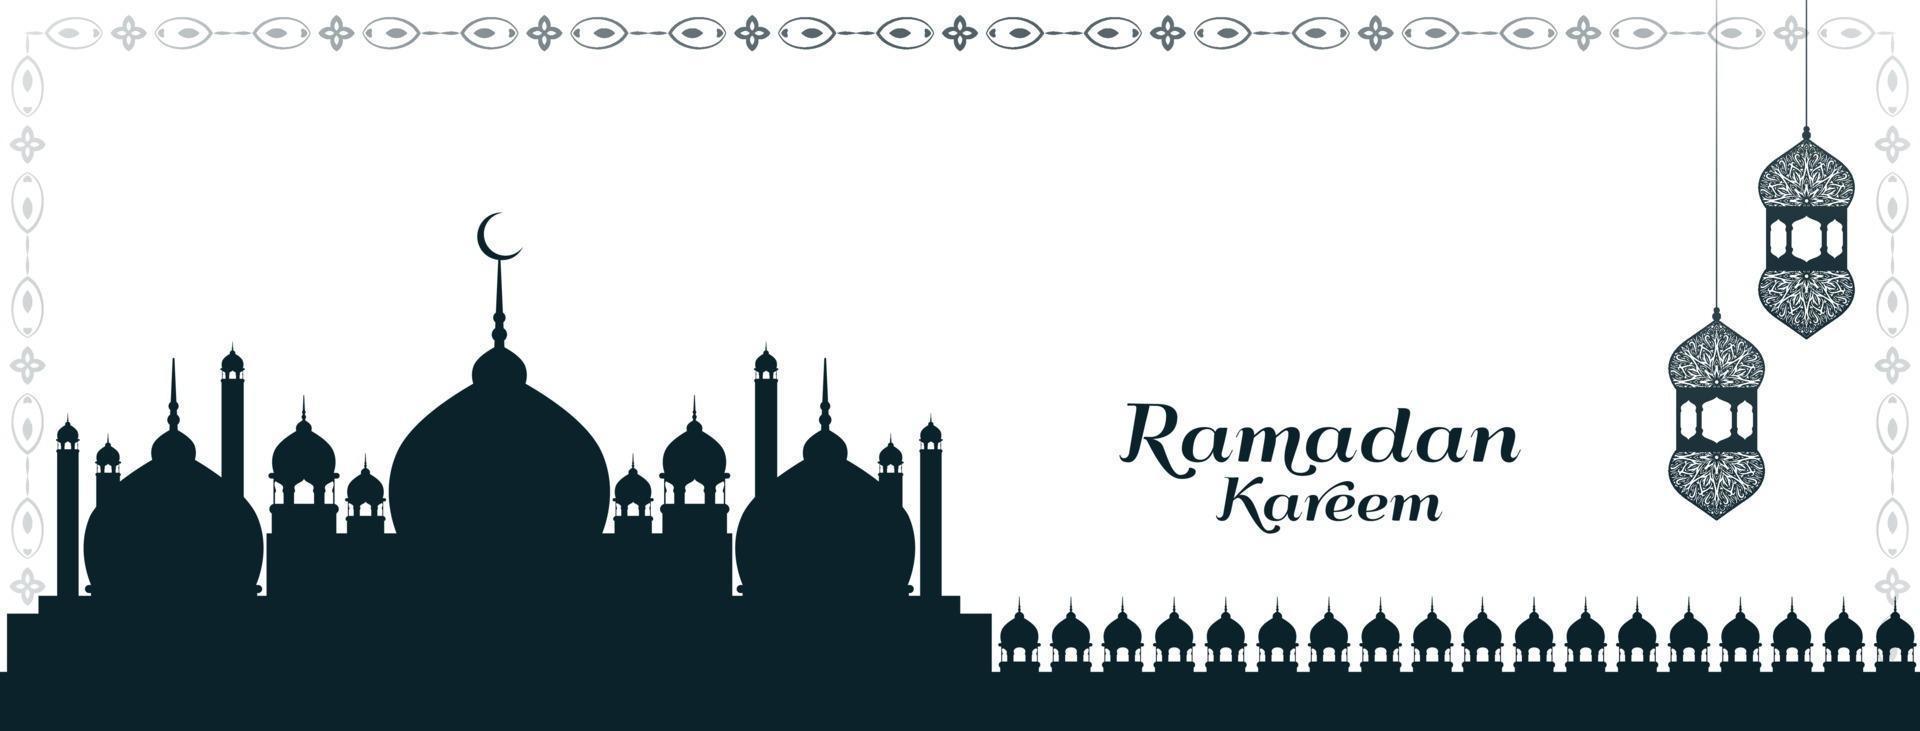 Cultural Ramadan Kareem festival islamic banner design vector